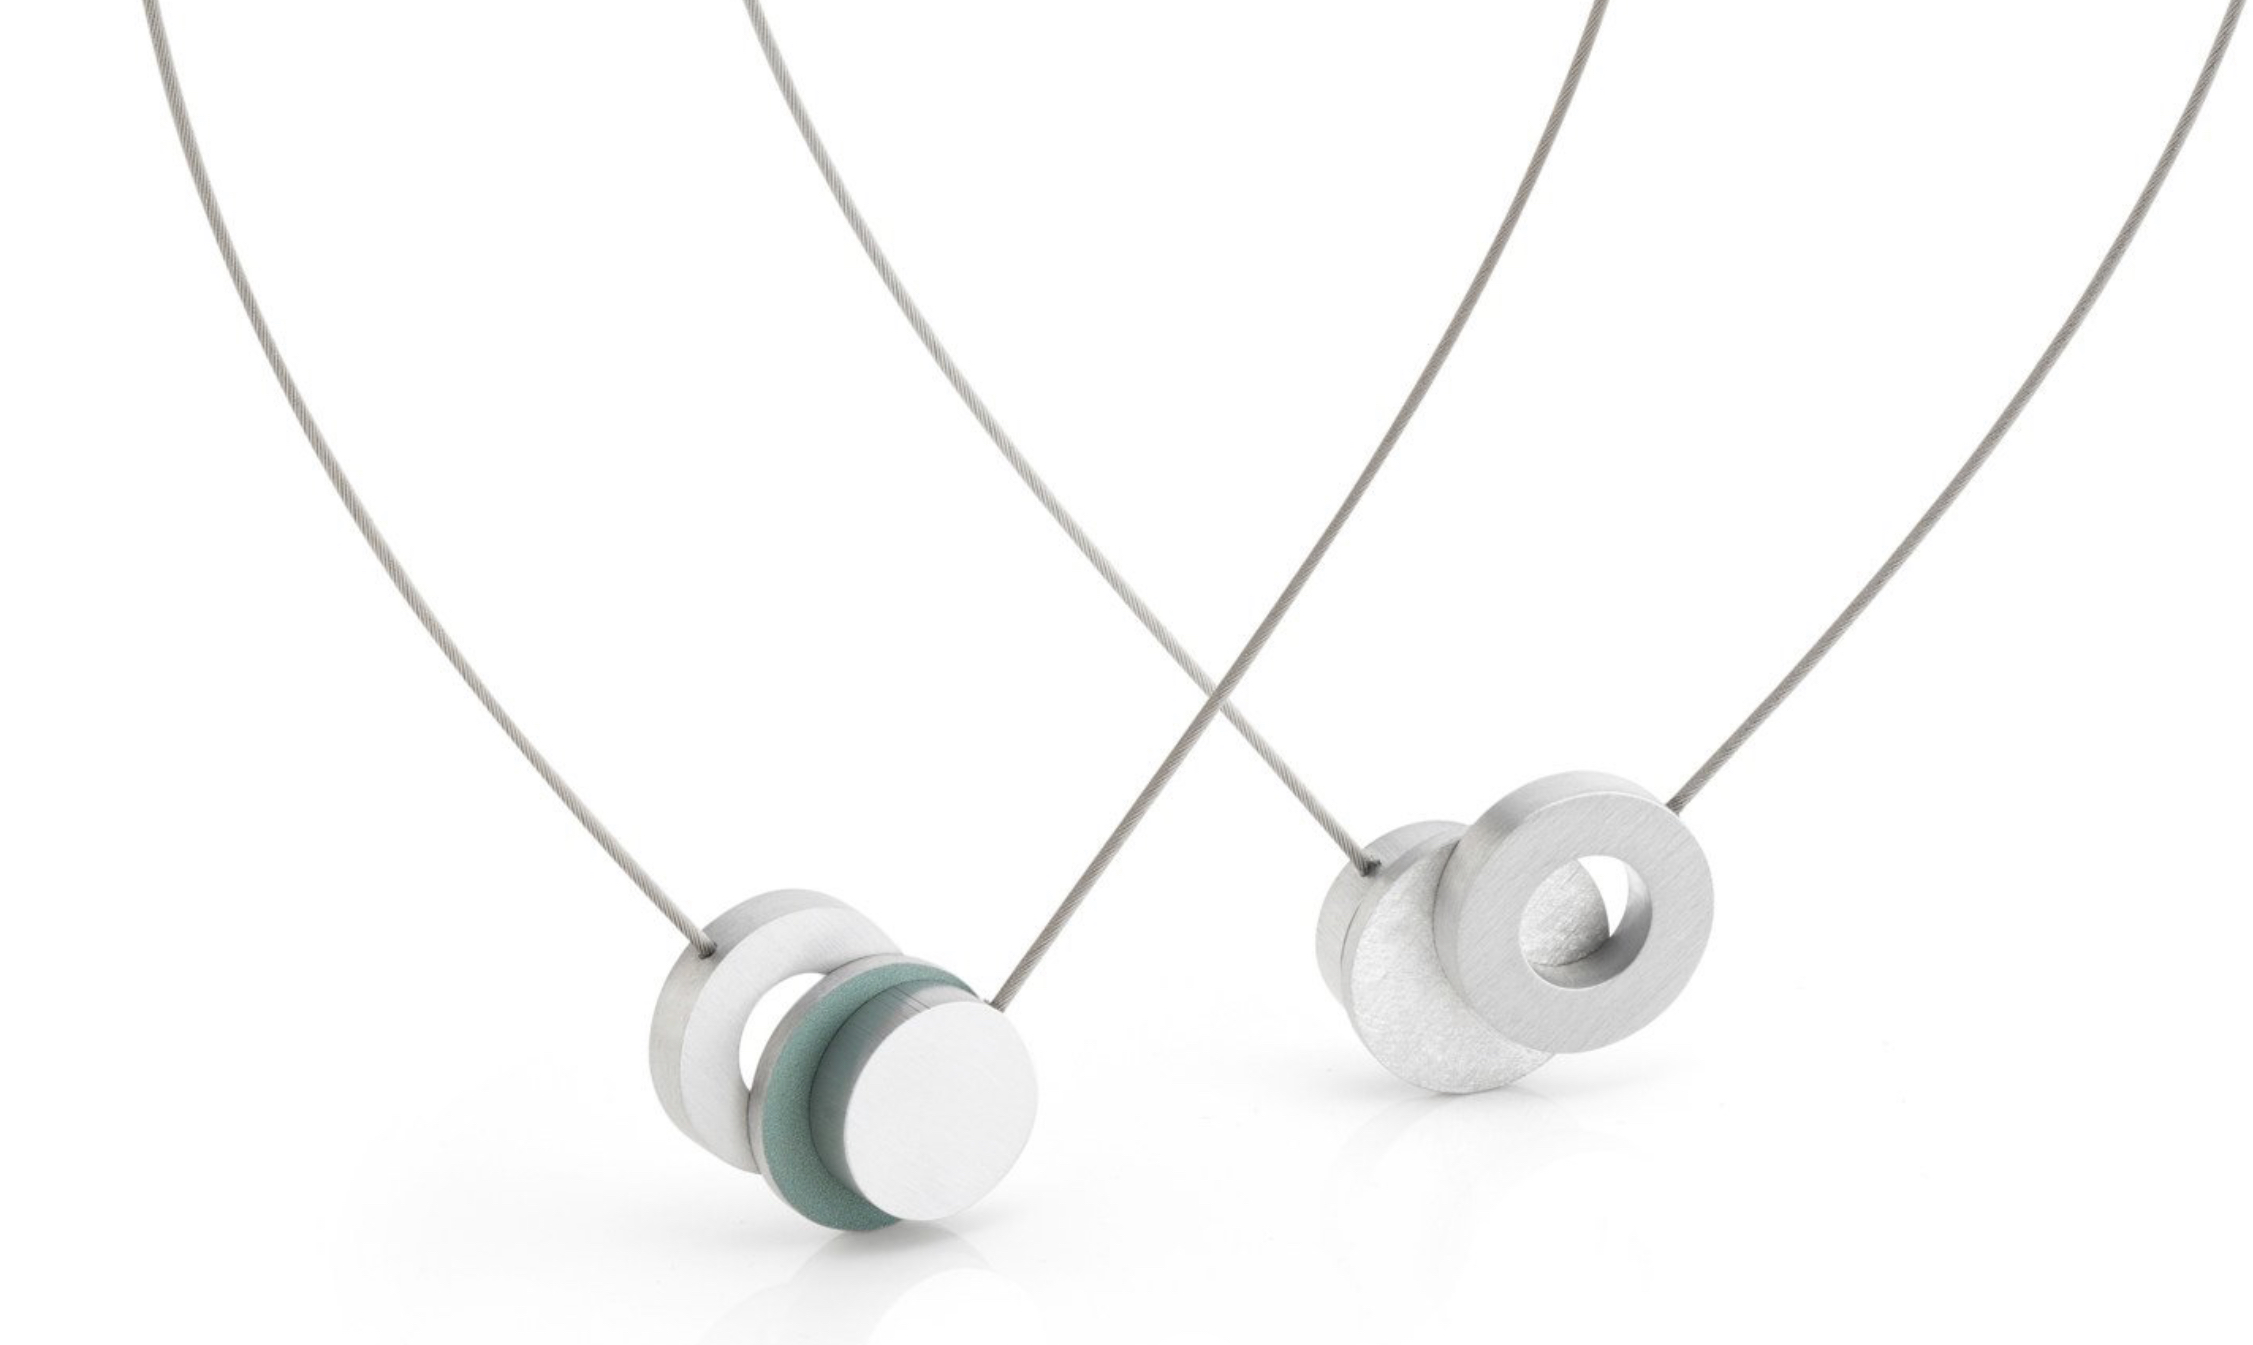 Collier ketting clic dutch design jewelry